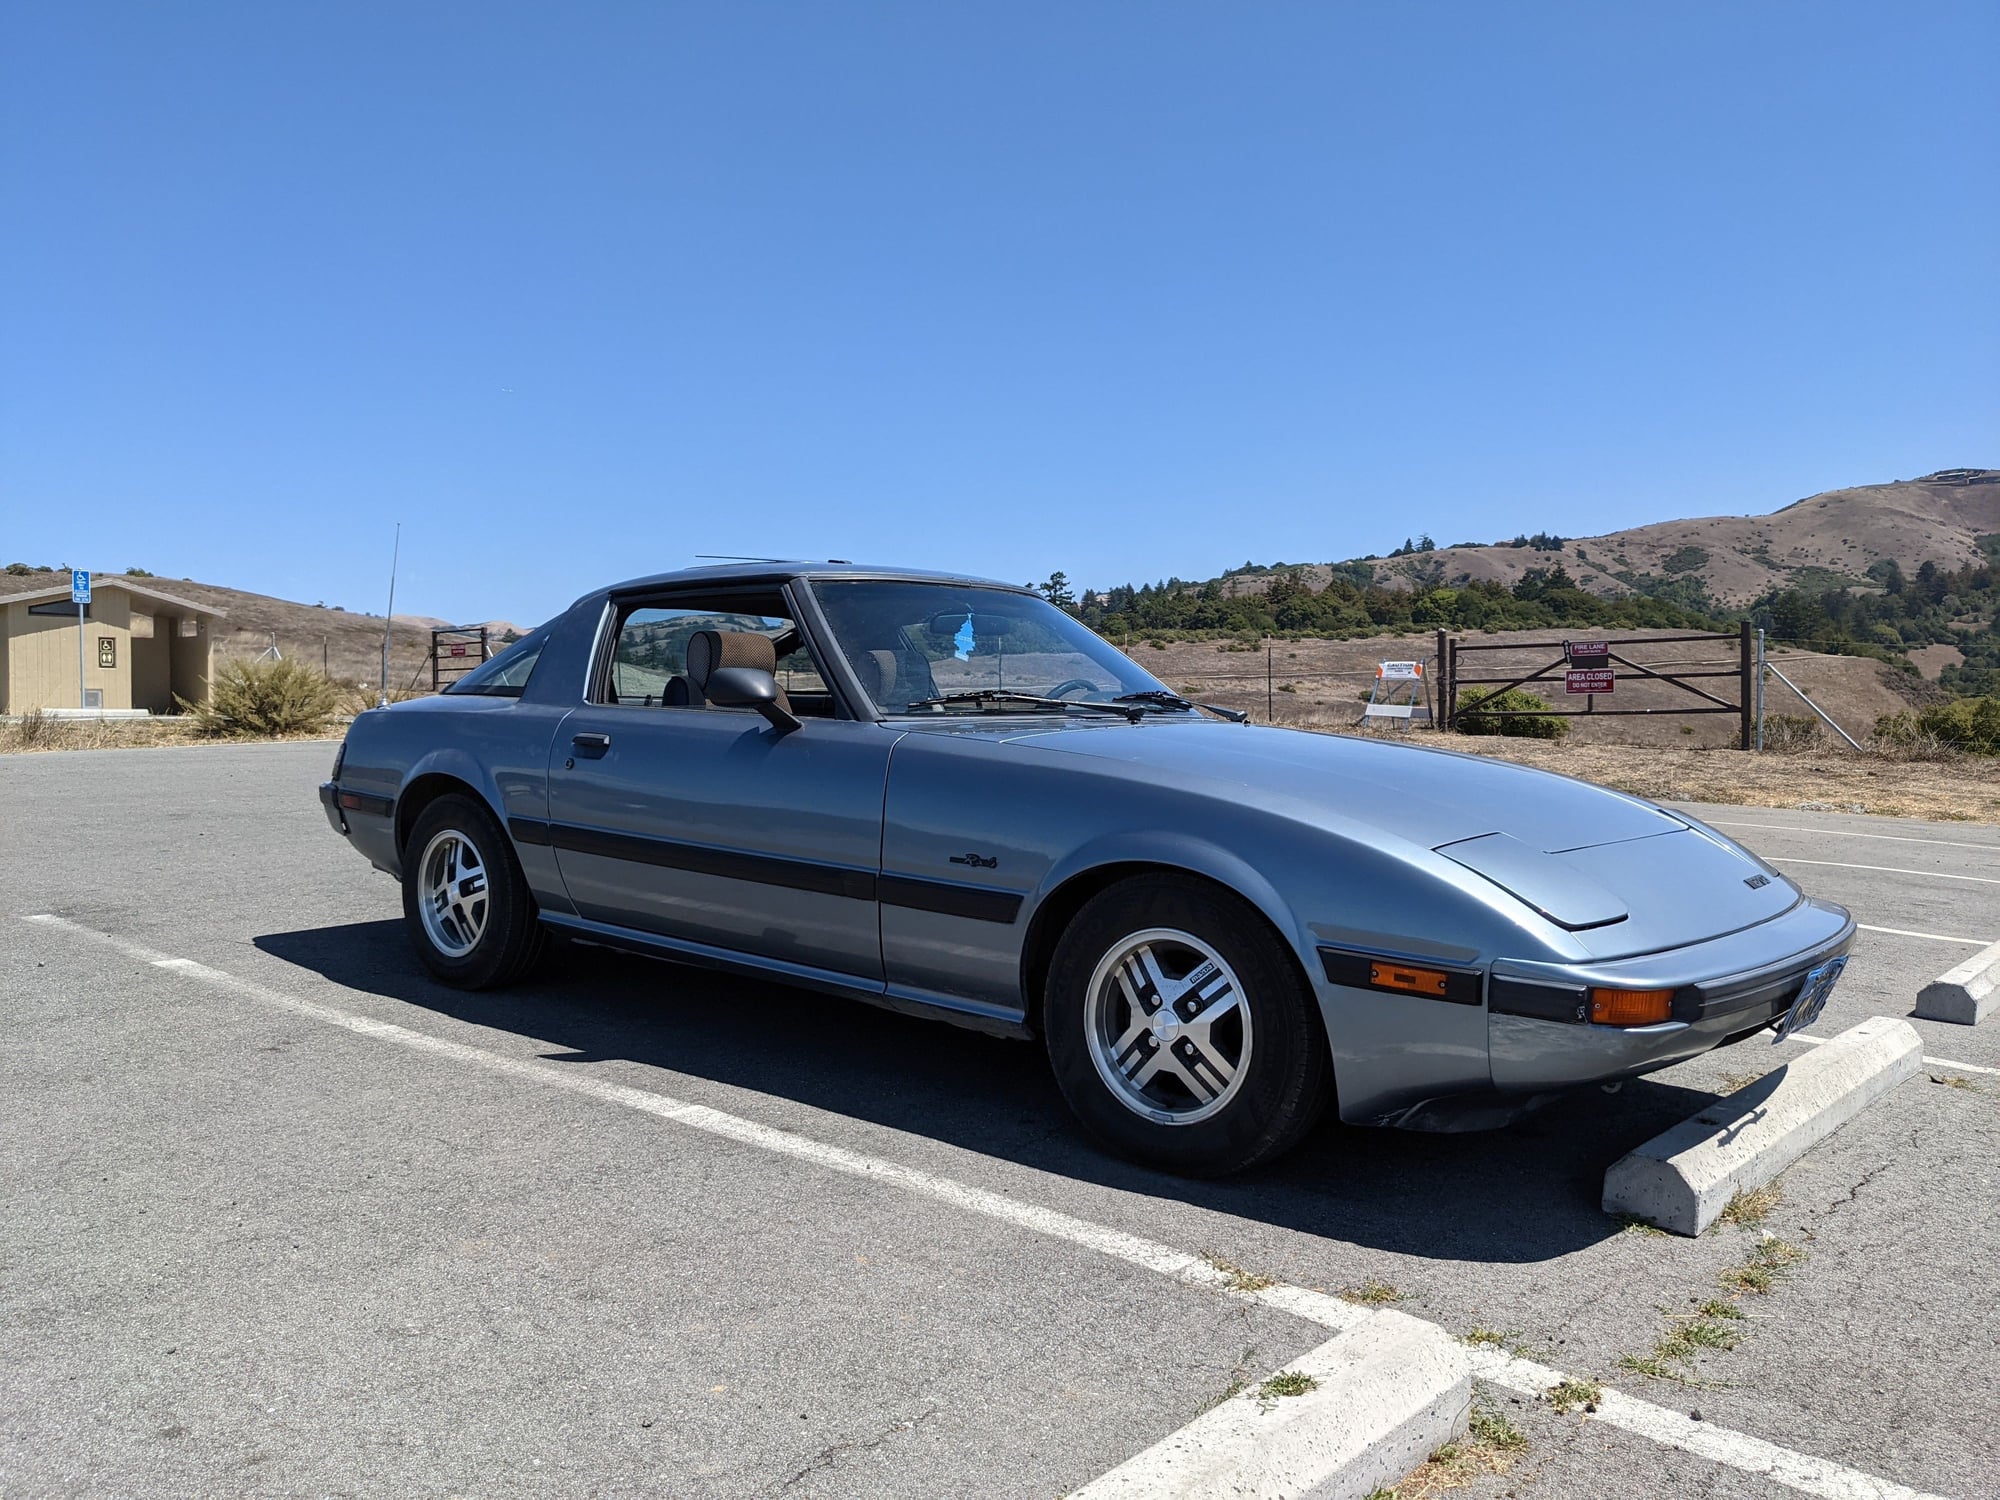 1985 Mazda RX-7 - 1985 RX-7 GS - Fully refreshed - Used - VIN JM1FB3316F0878812 - 128,640 Miles - La Honda, CA 94062, United States